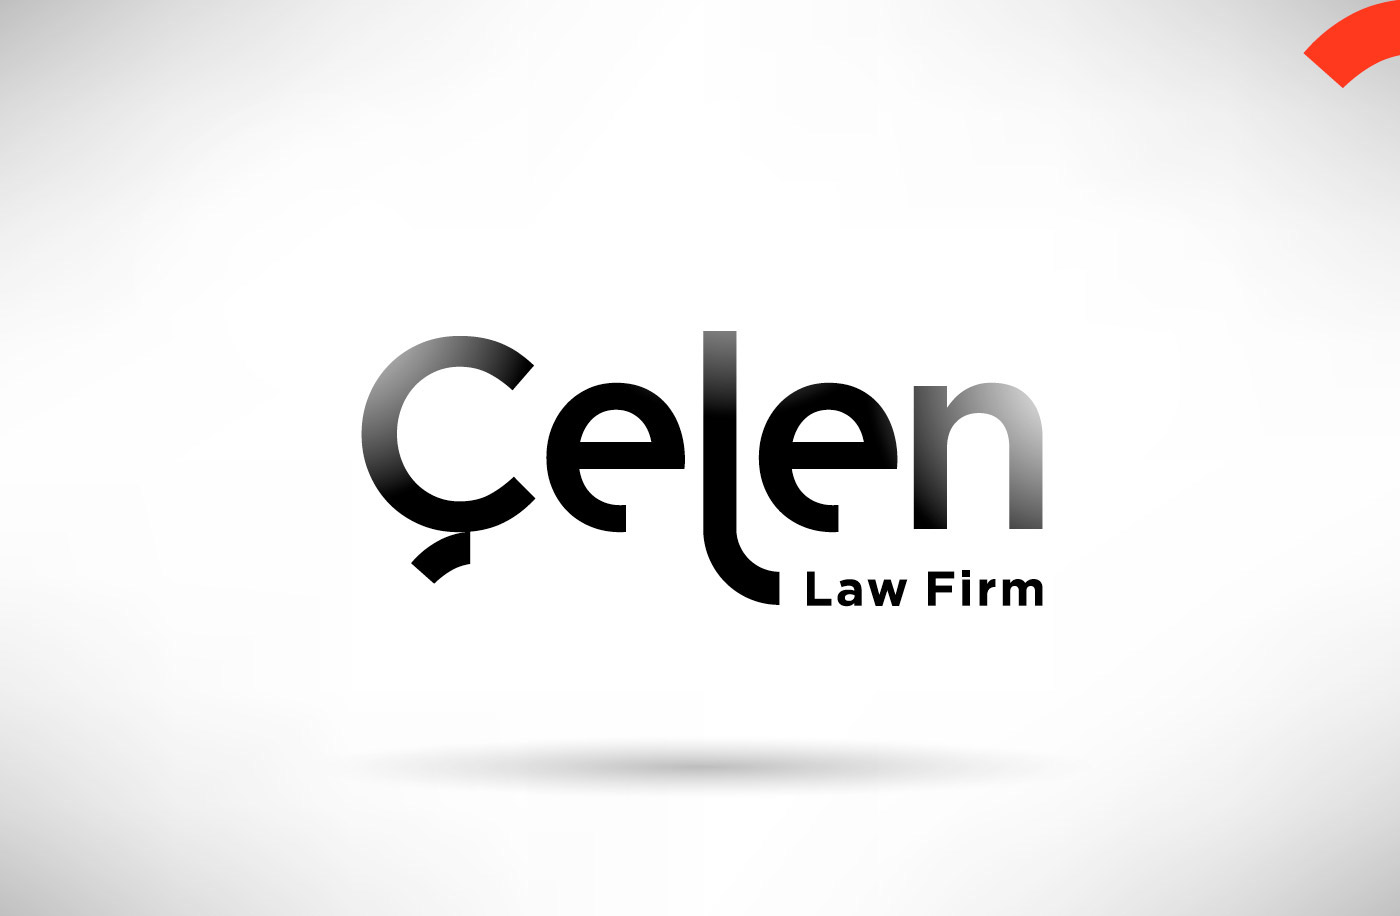 Adobe Portfolio celen law firm Office graphic istanbul